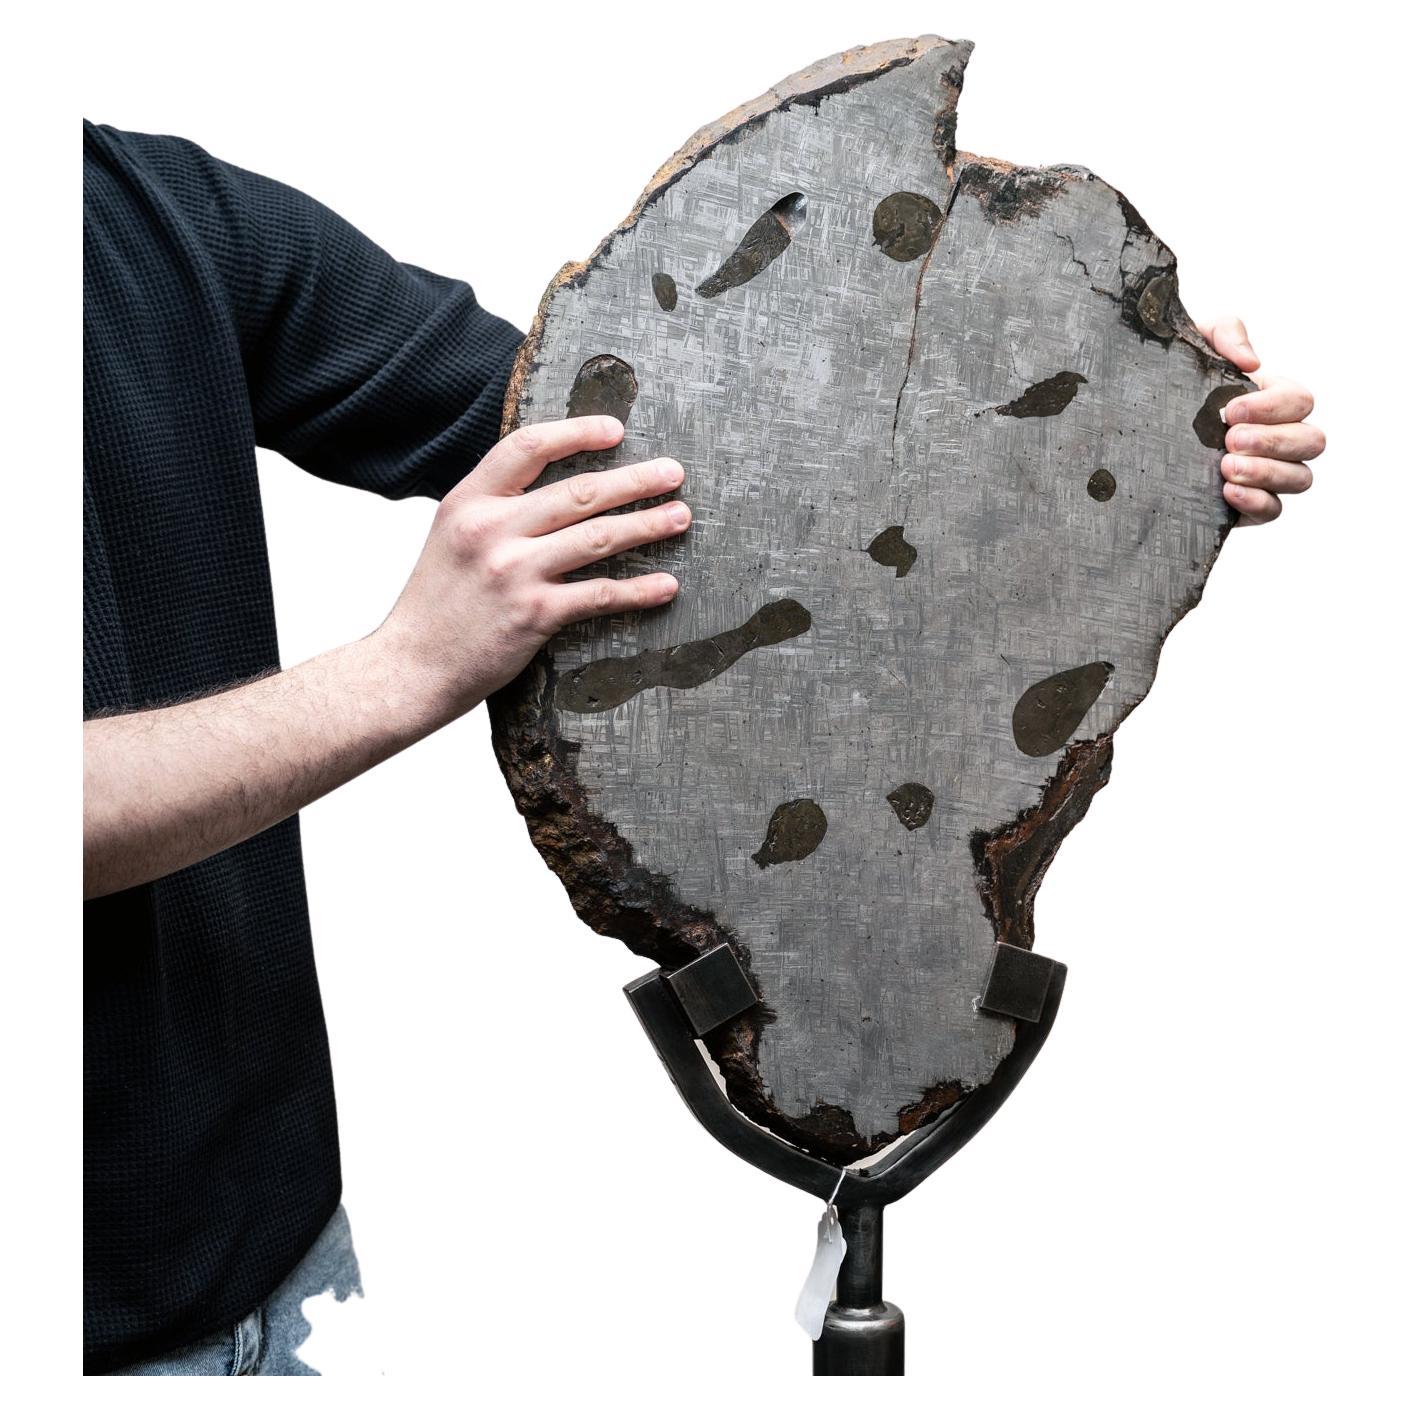 Giant Muonionalusta Meteorite '86 lbs' on Custom Metal Stand For Sale